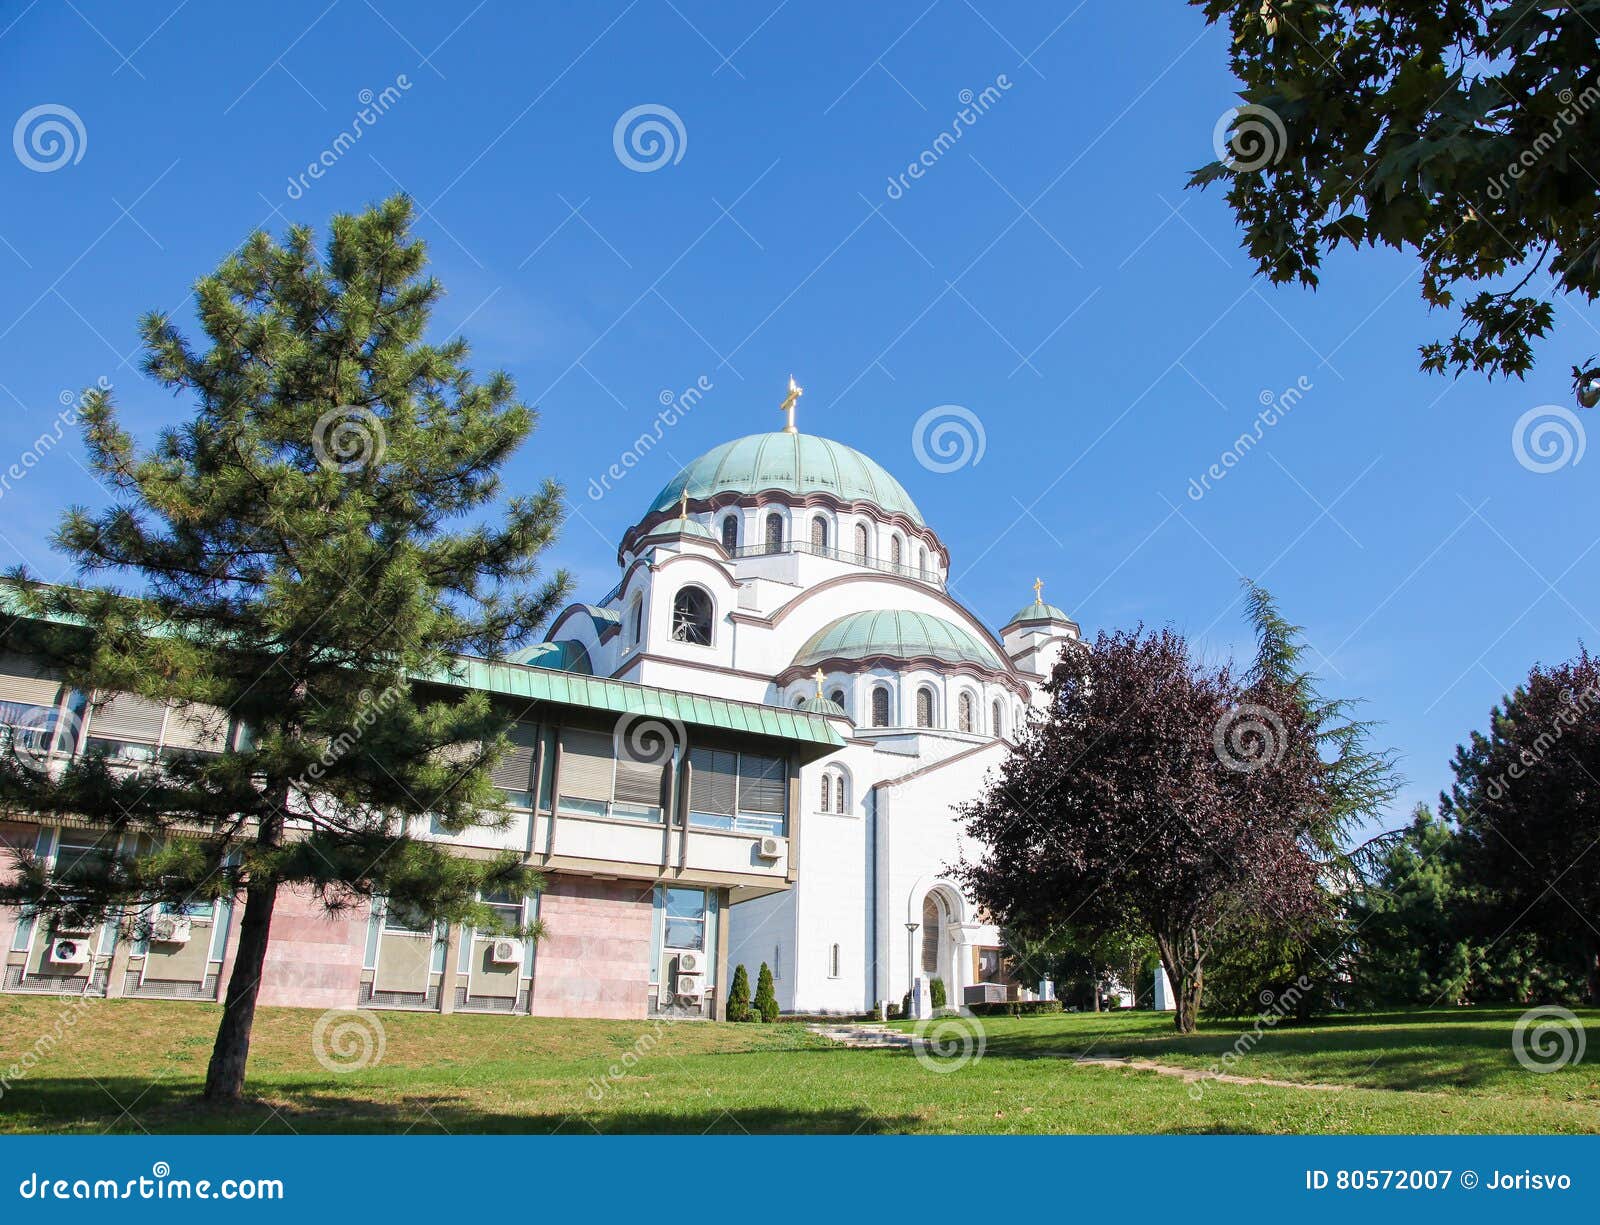 the church of saint sava in belgrade, serbia